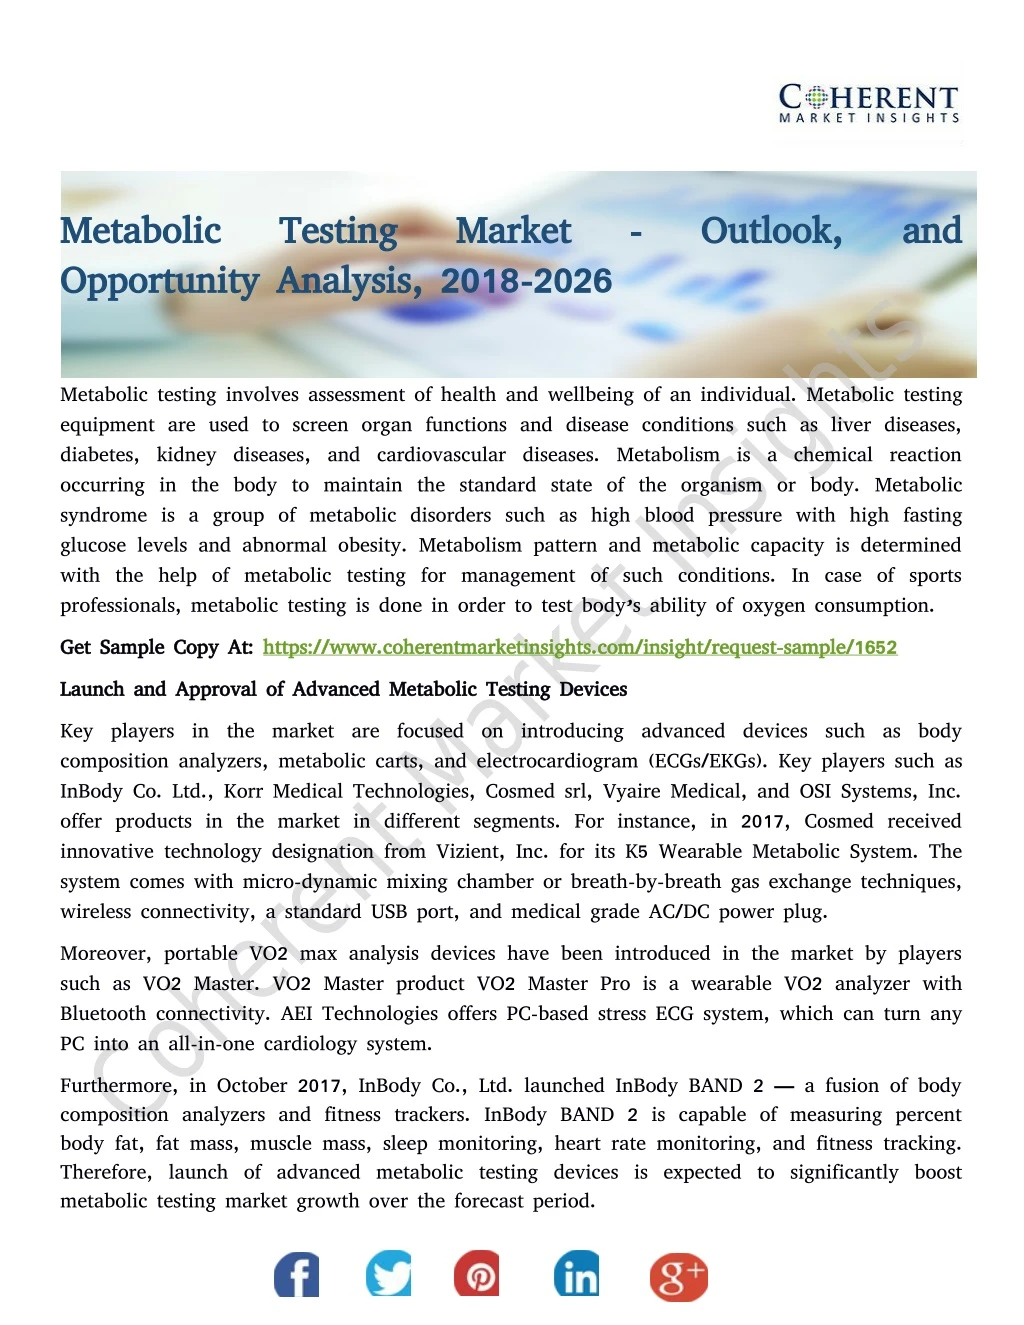 metabolic testing market outlook and metabolic